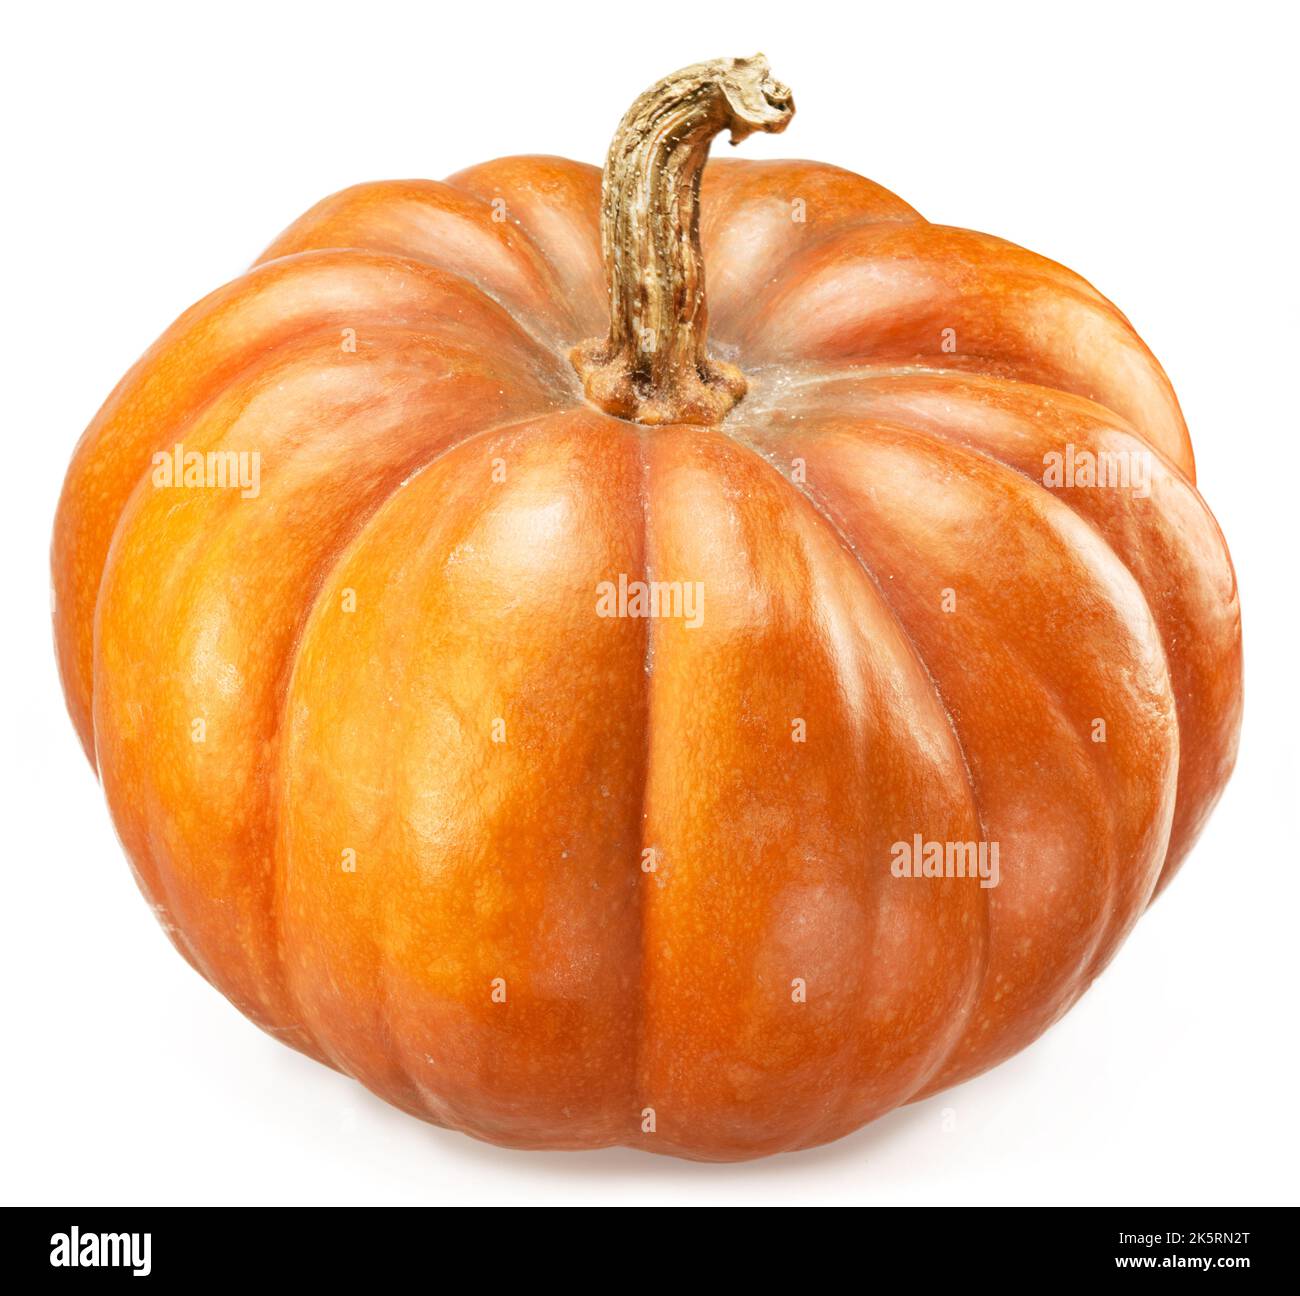 Orange round pumpkin isolated on white background. Stock Photo